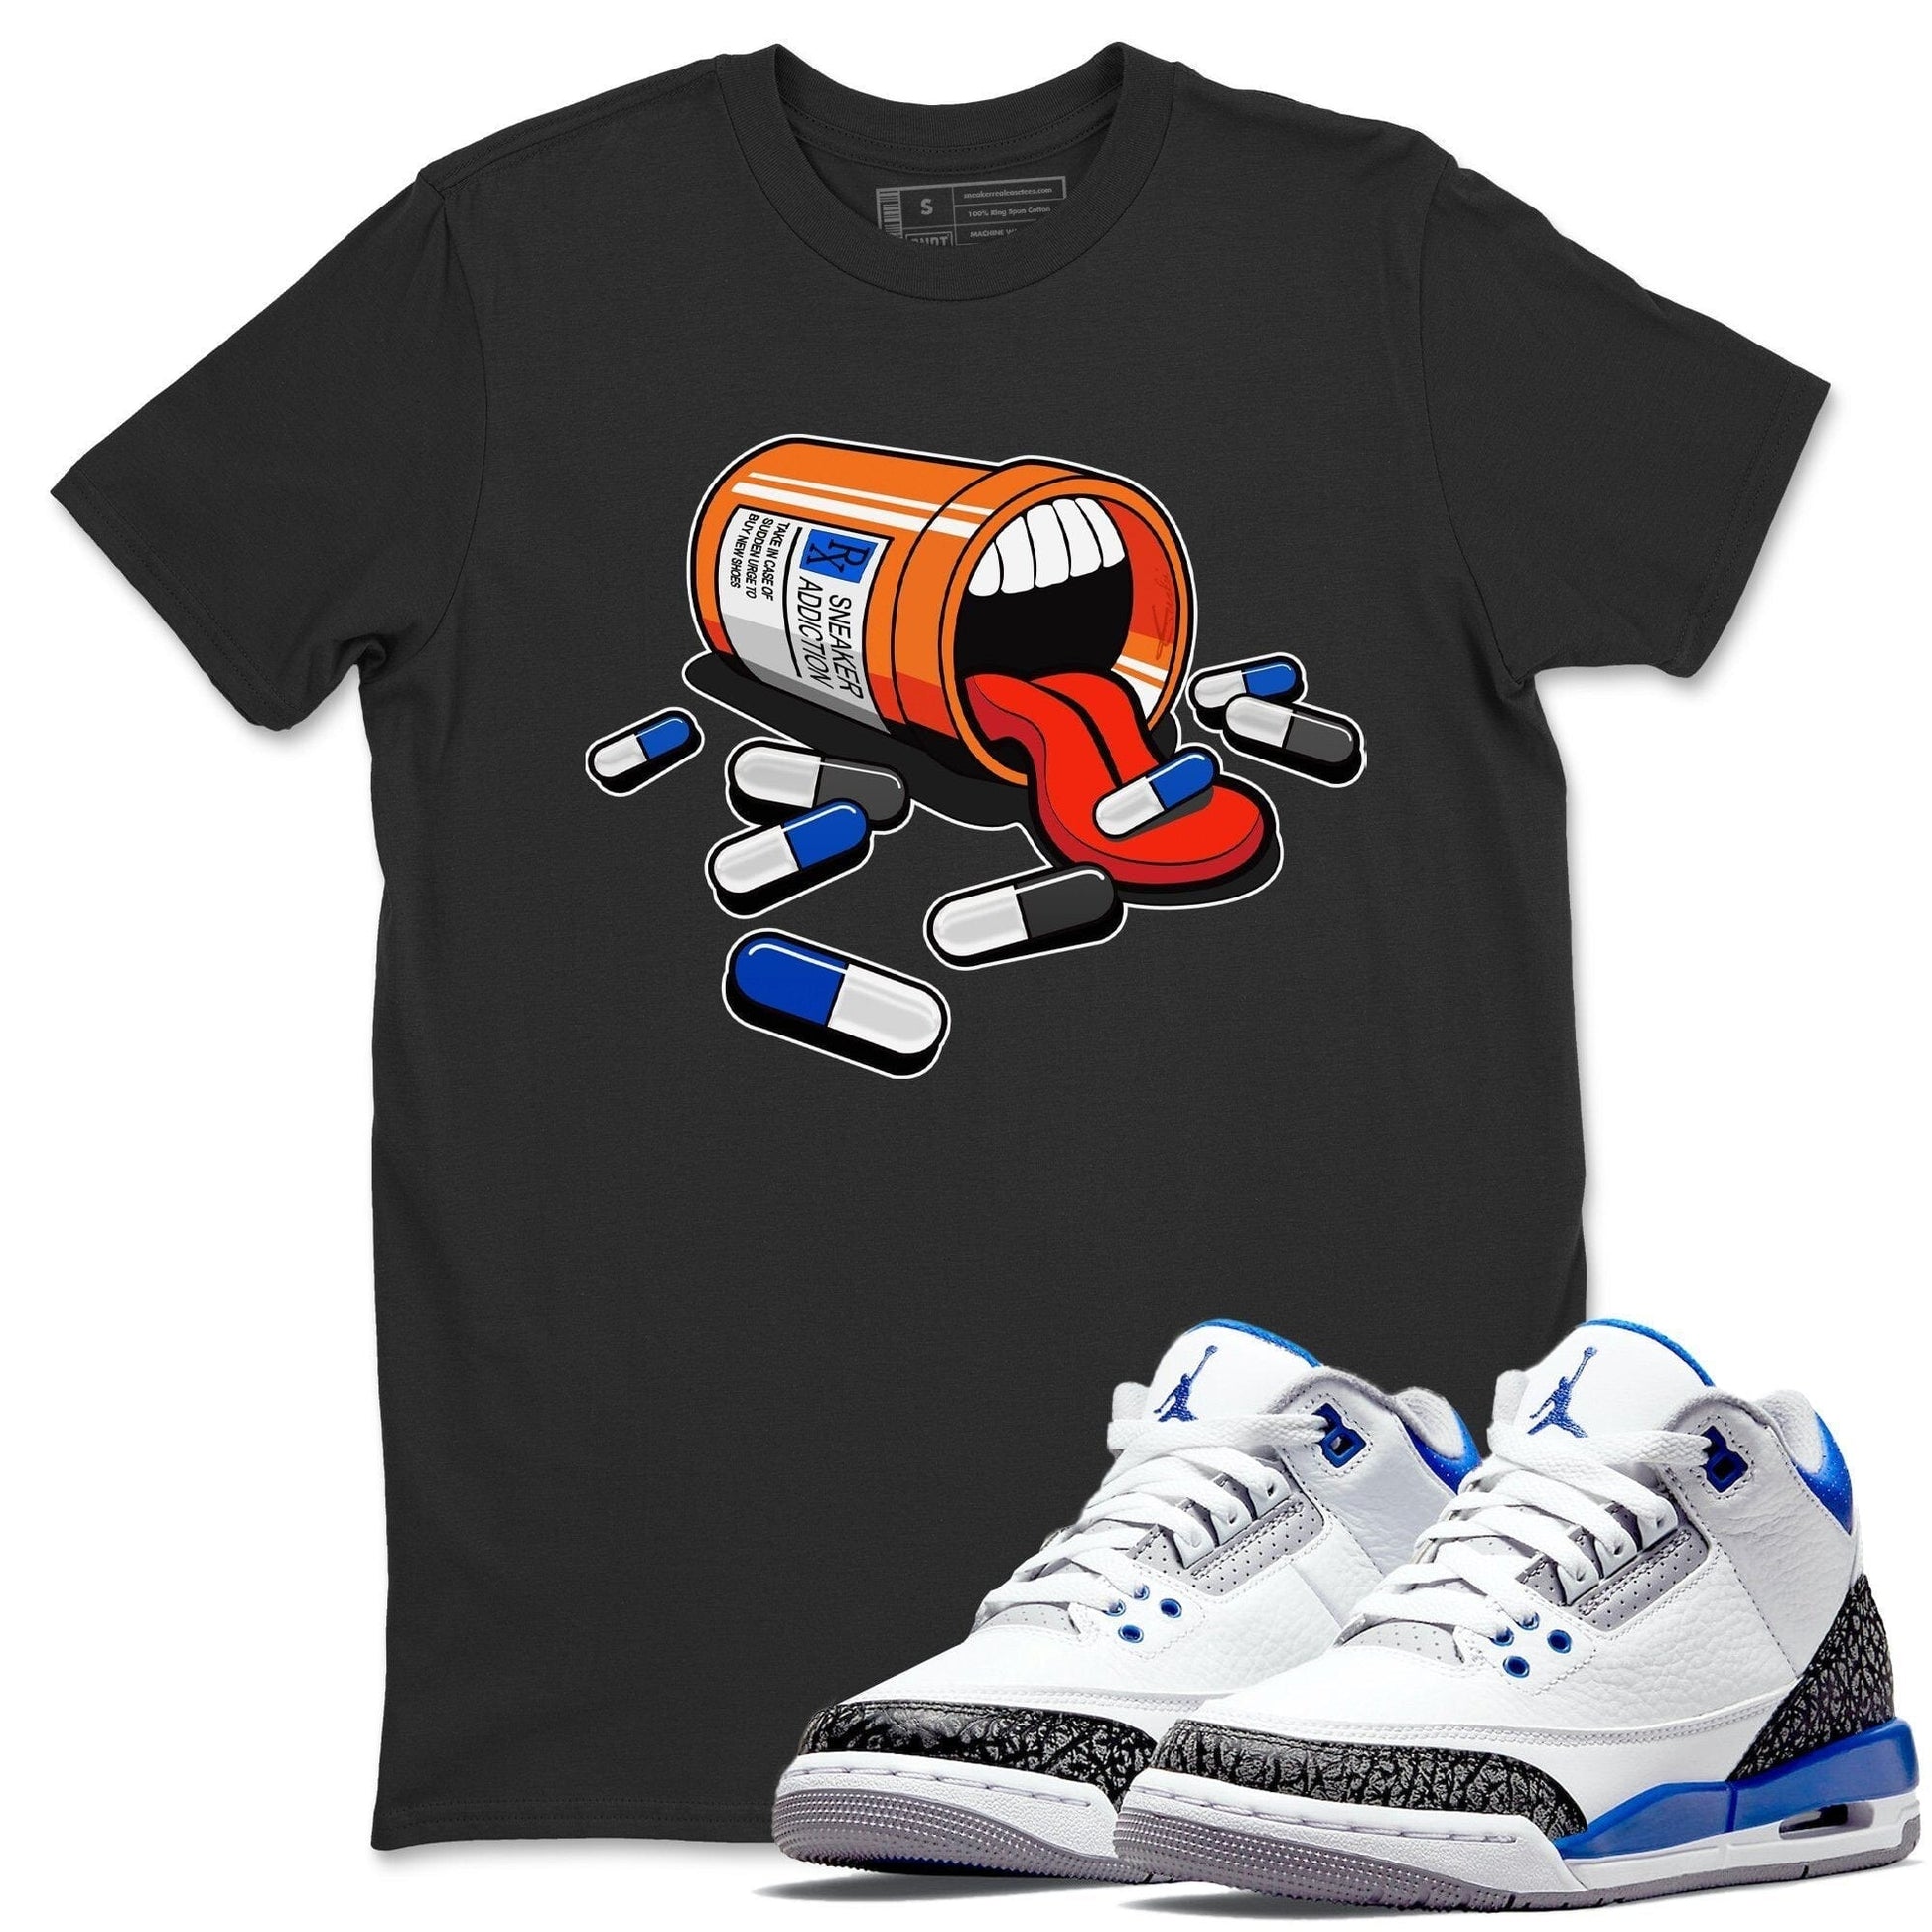 Jordan 3 Racer Blue Shirt To Match Jordans Sneaker Addiction Sneaker Tees Jordan 3 Racer Blue Drip Gear Zone Sneaker Matching Clothing Unisex Shirts